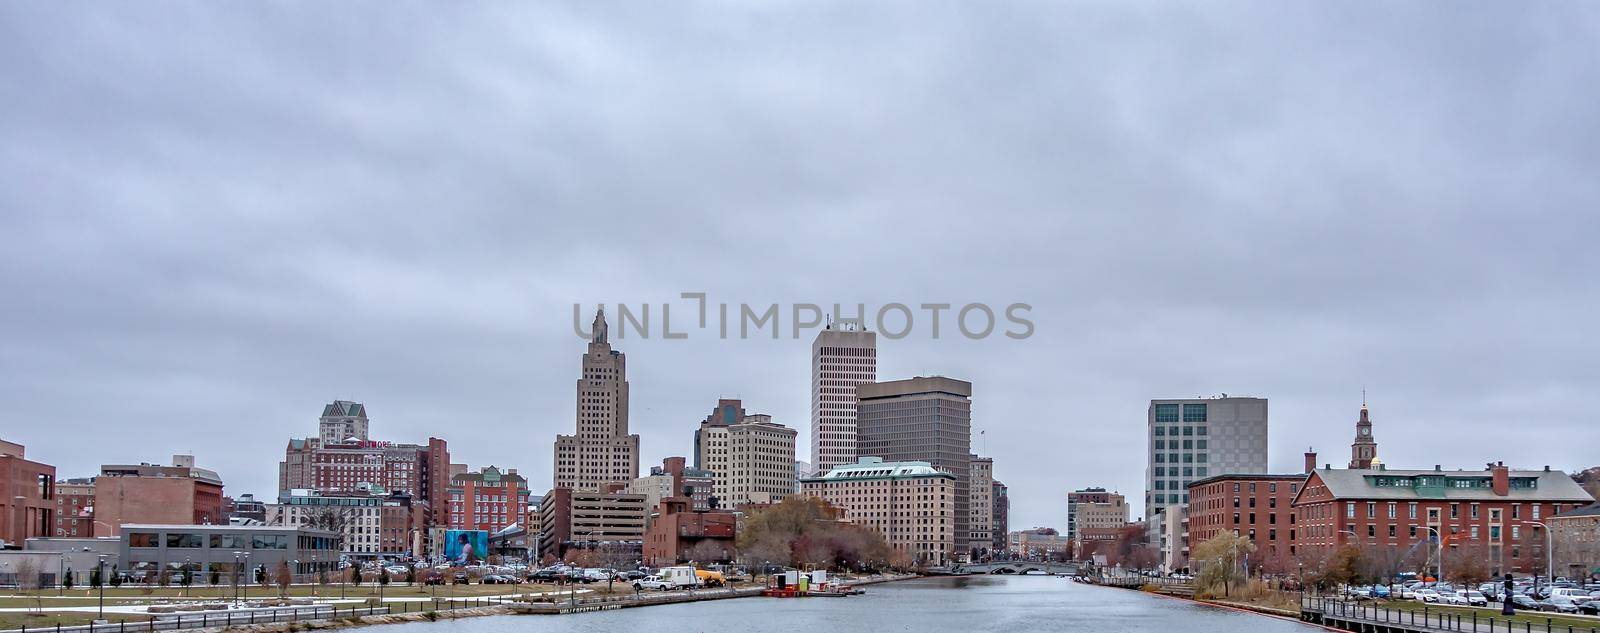 Providence rhode island skyline on a cloudy gloomy day  by digidreamgrafix